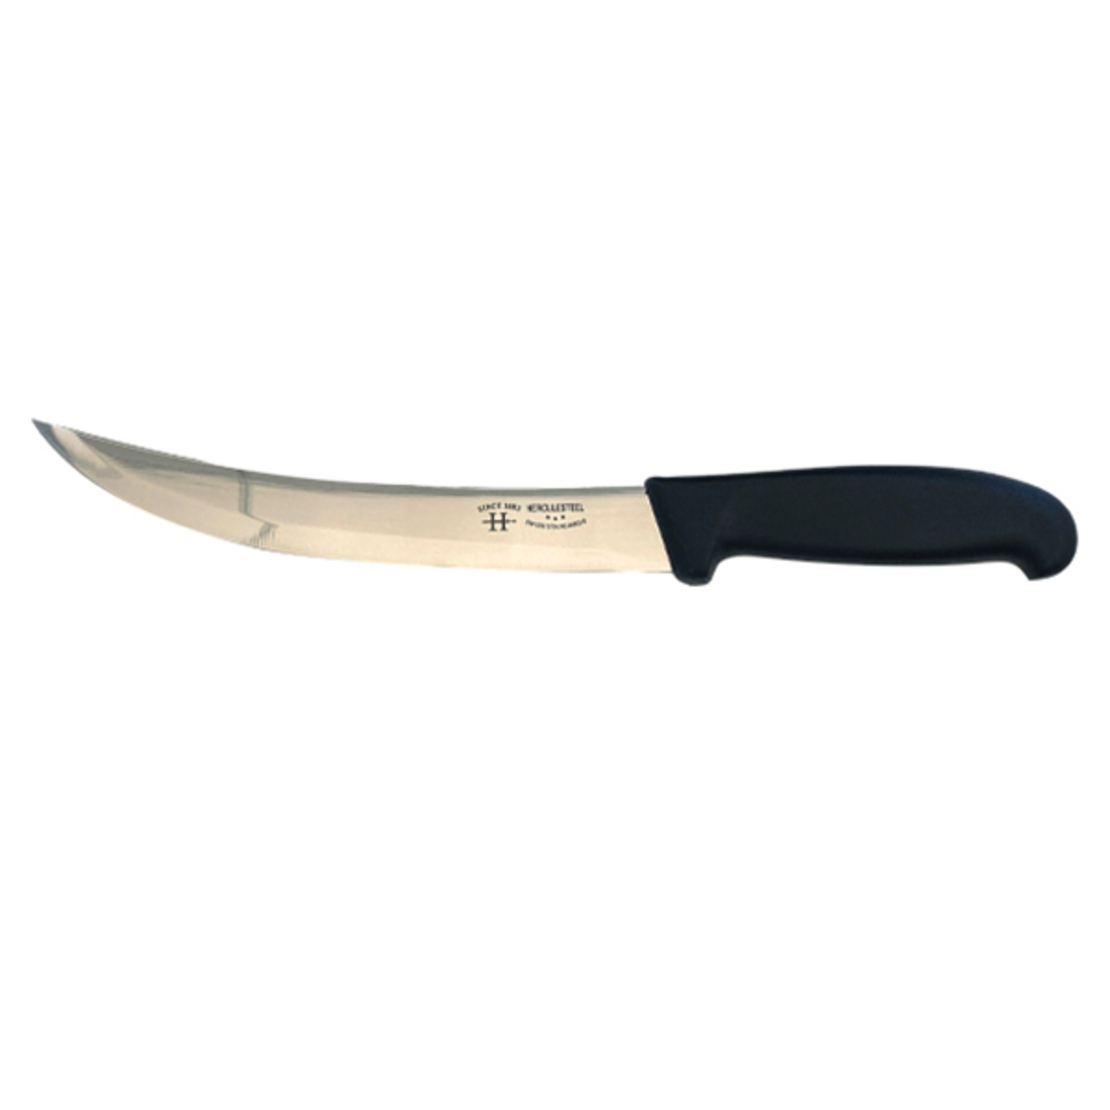 Butcher chef knife 34 cm cutting meat and steak curved head herculesteel classic